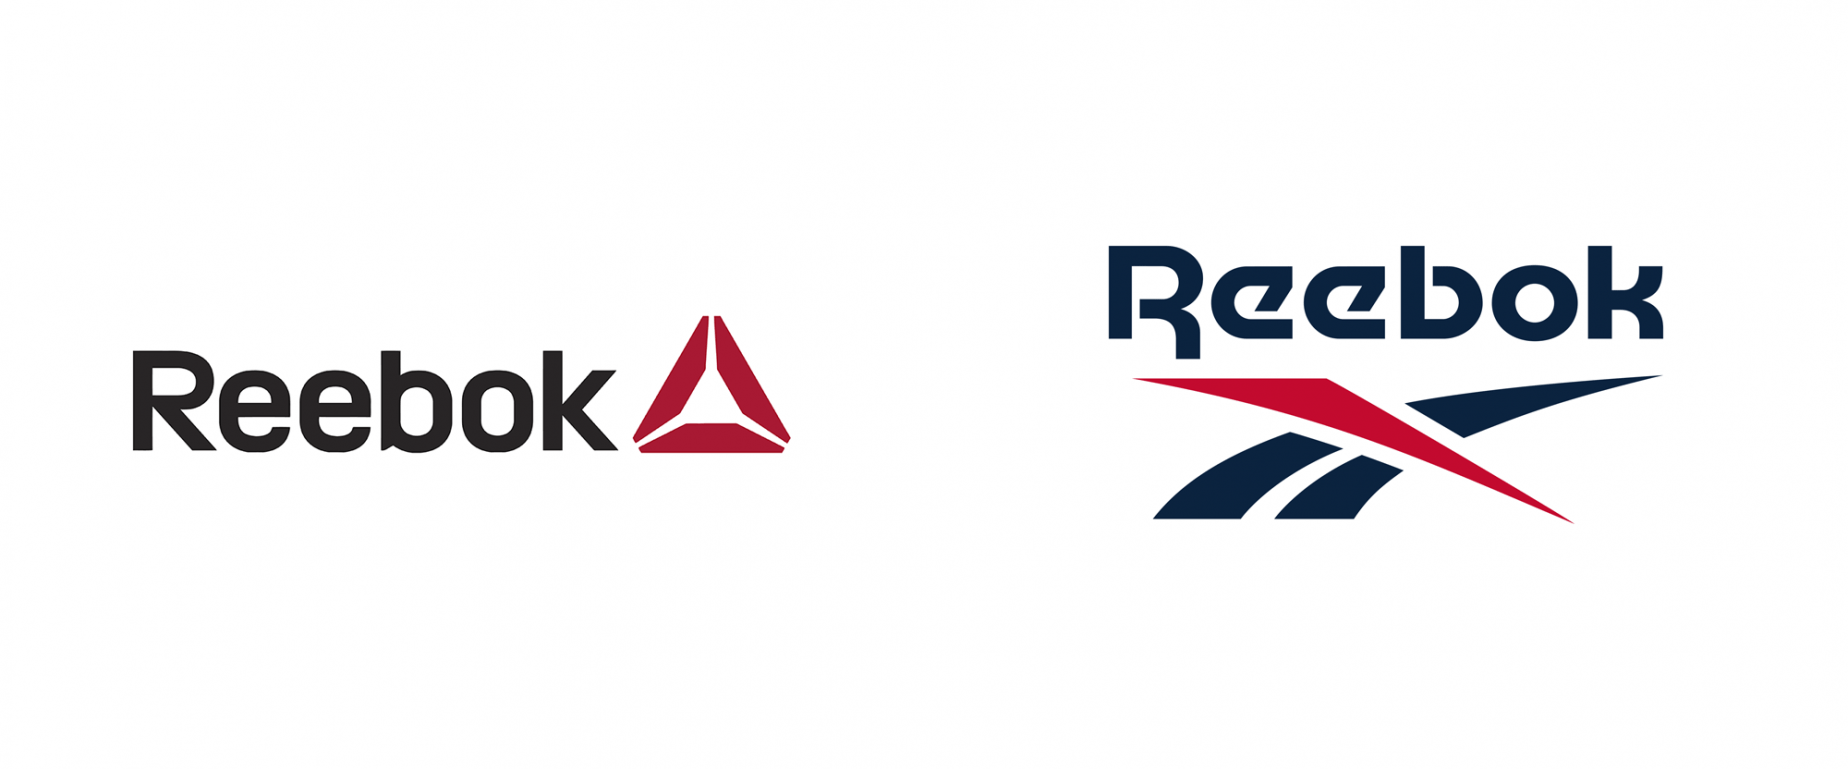 il nuovo logo Reebok